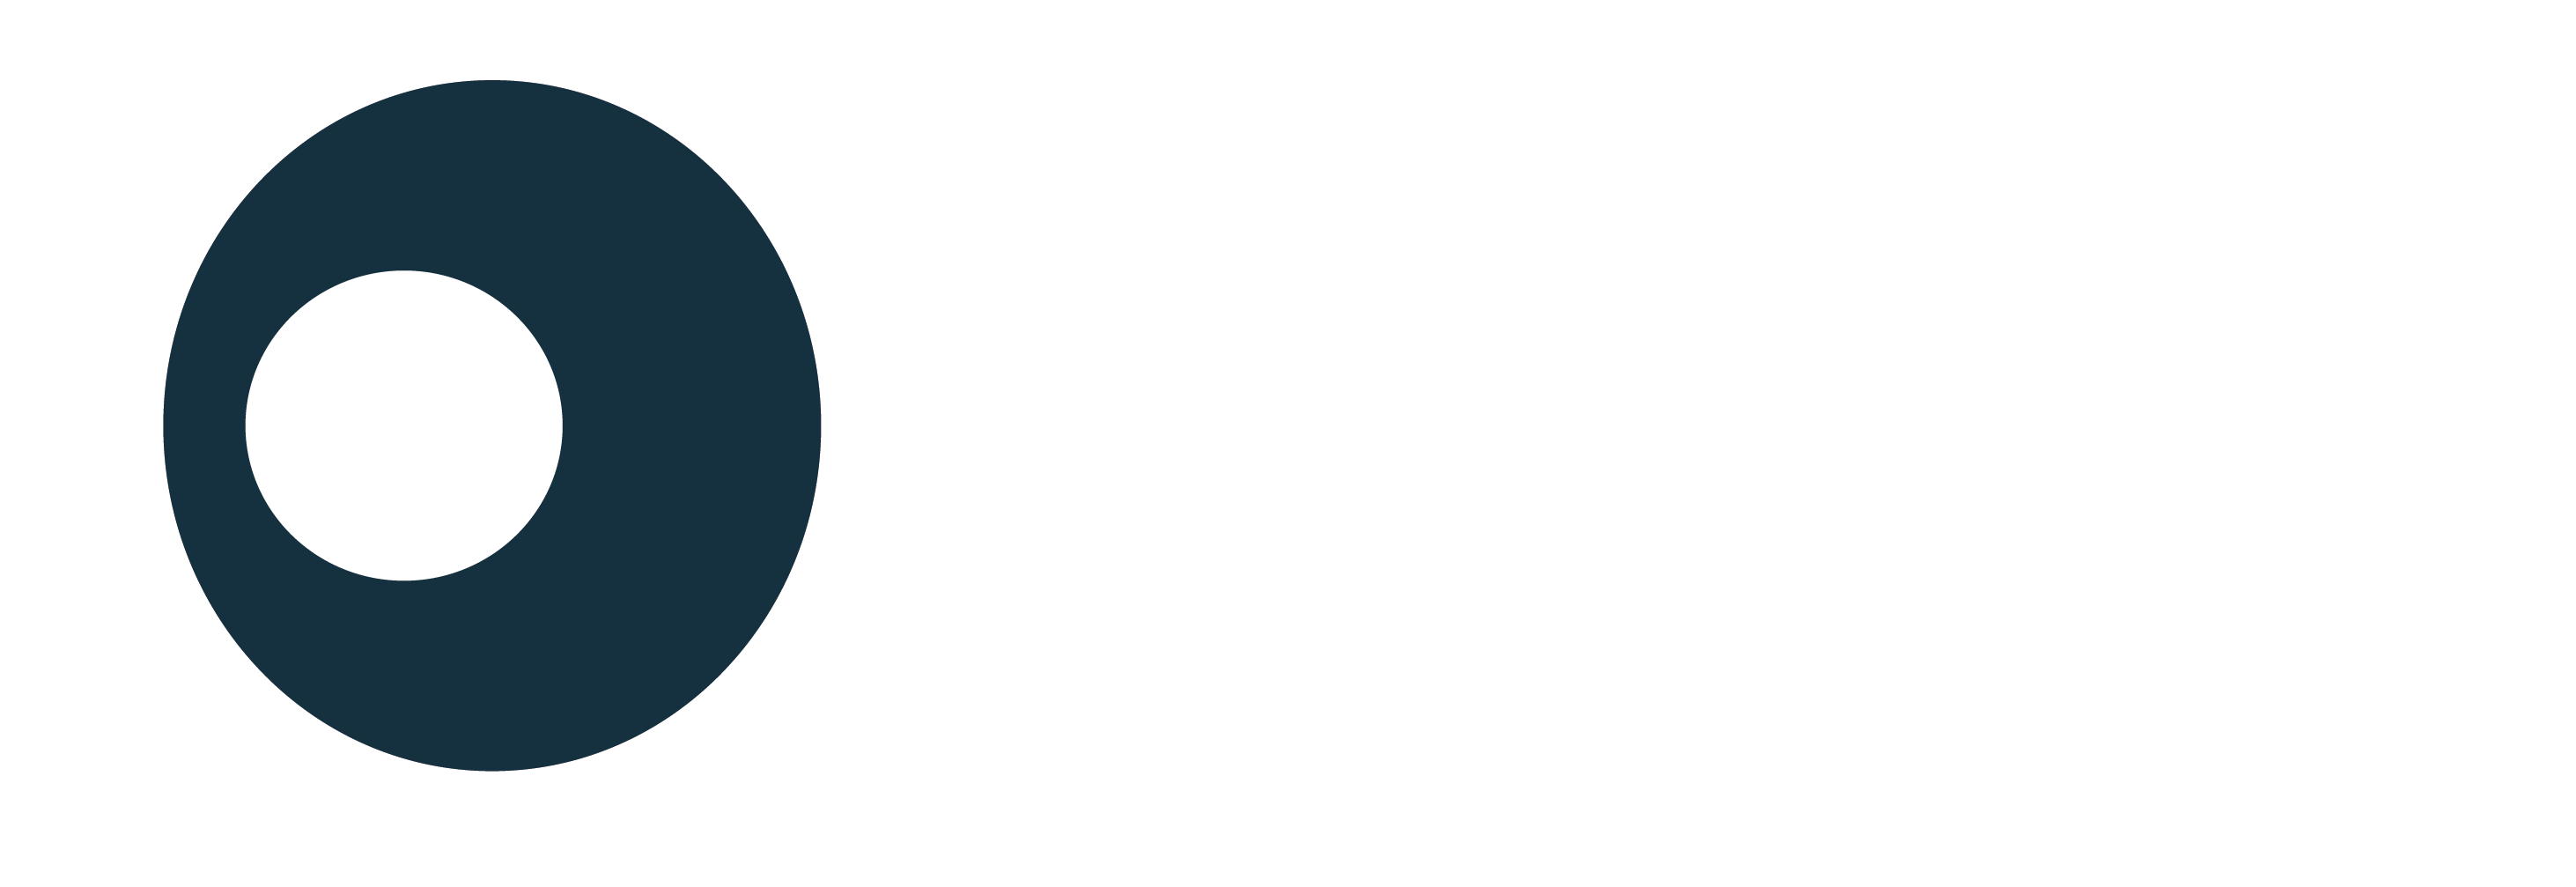 Amsterdam 2021 - The Digital Benchmark - EBG